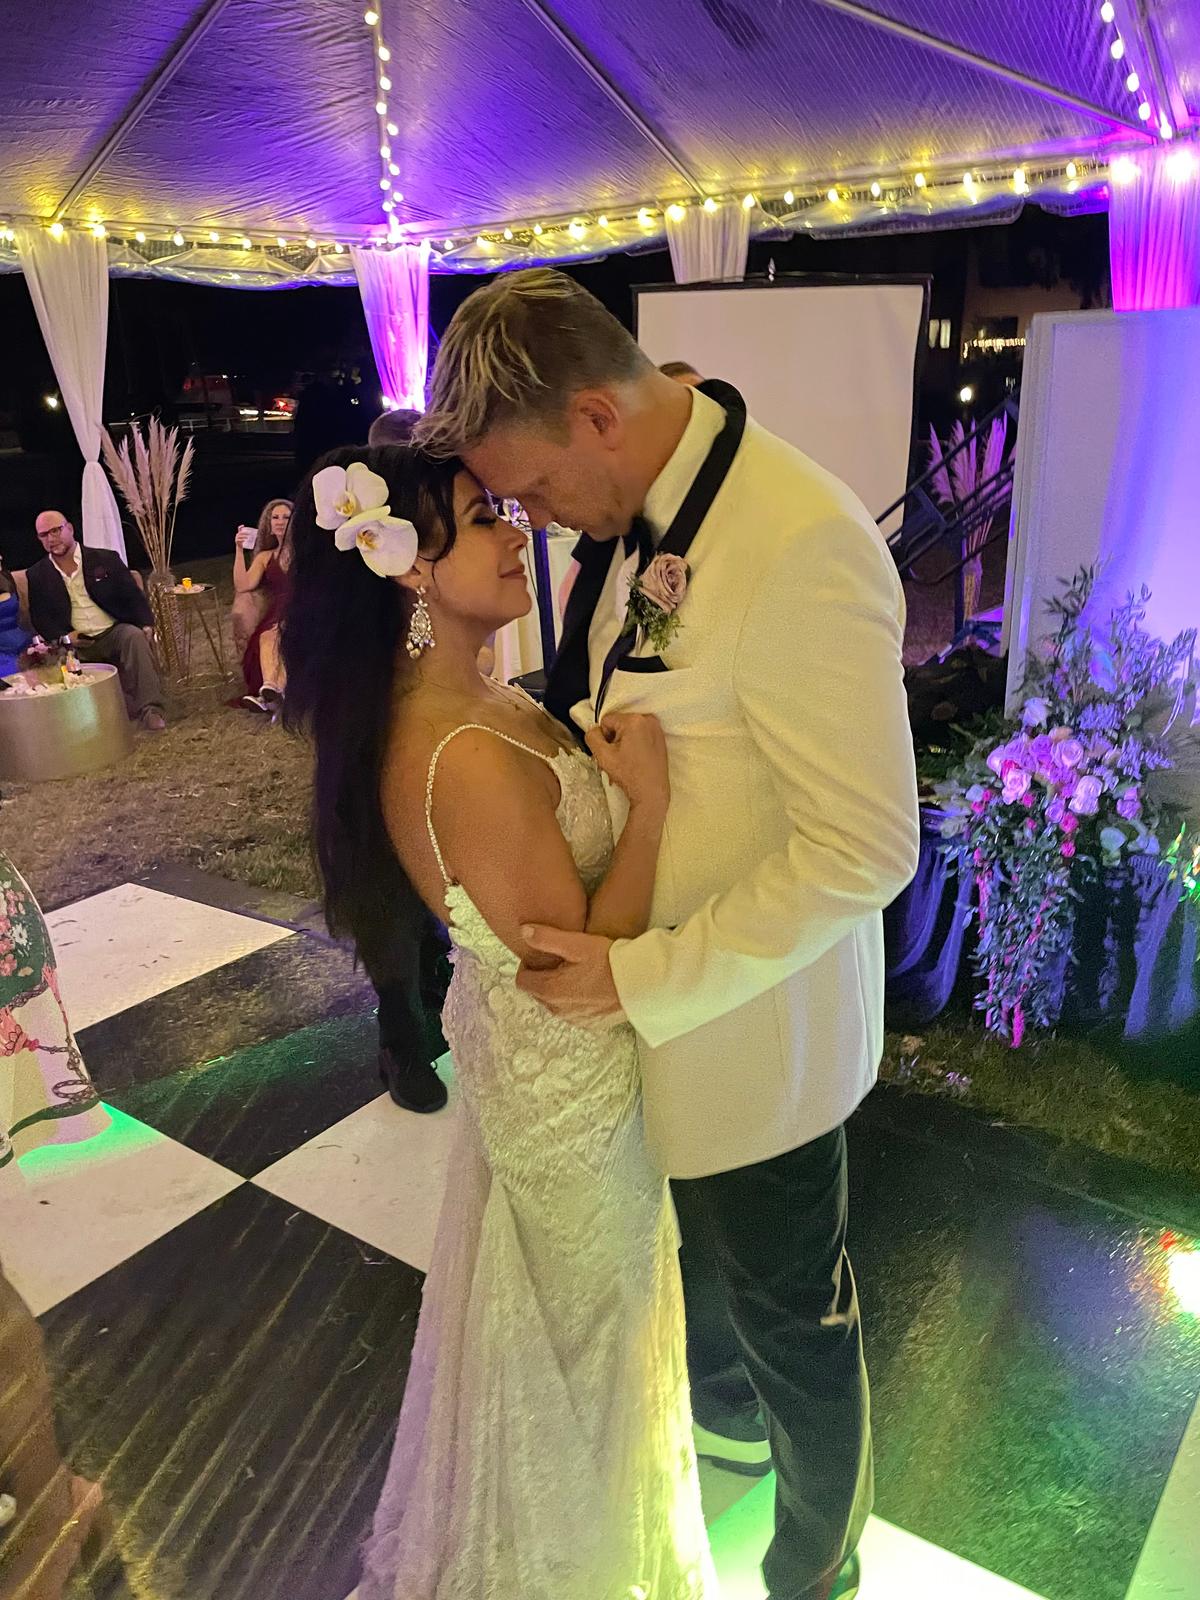 Rachel Baribeau dances with her husband at their wedding. (Courtesy of <a href="https://www.facebook.com/rachelbaribeau/">Rachel Baribeau</a>)